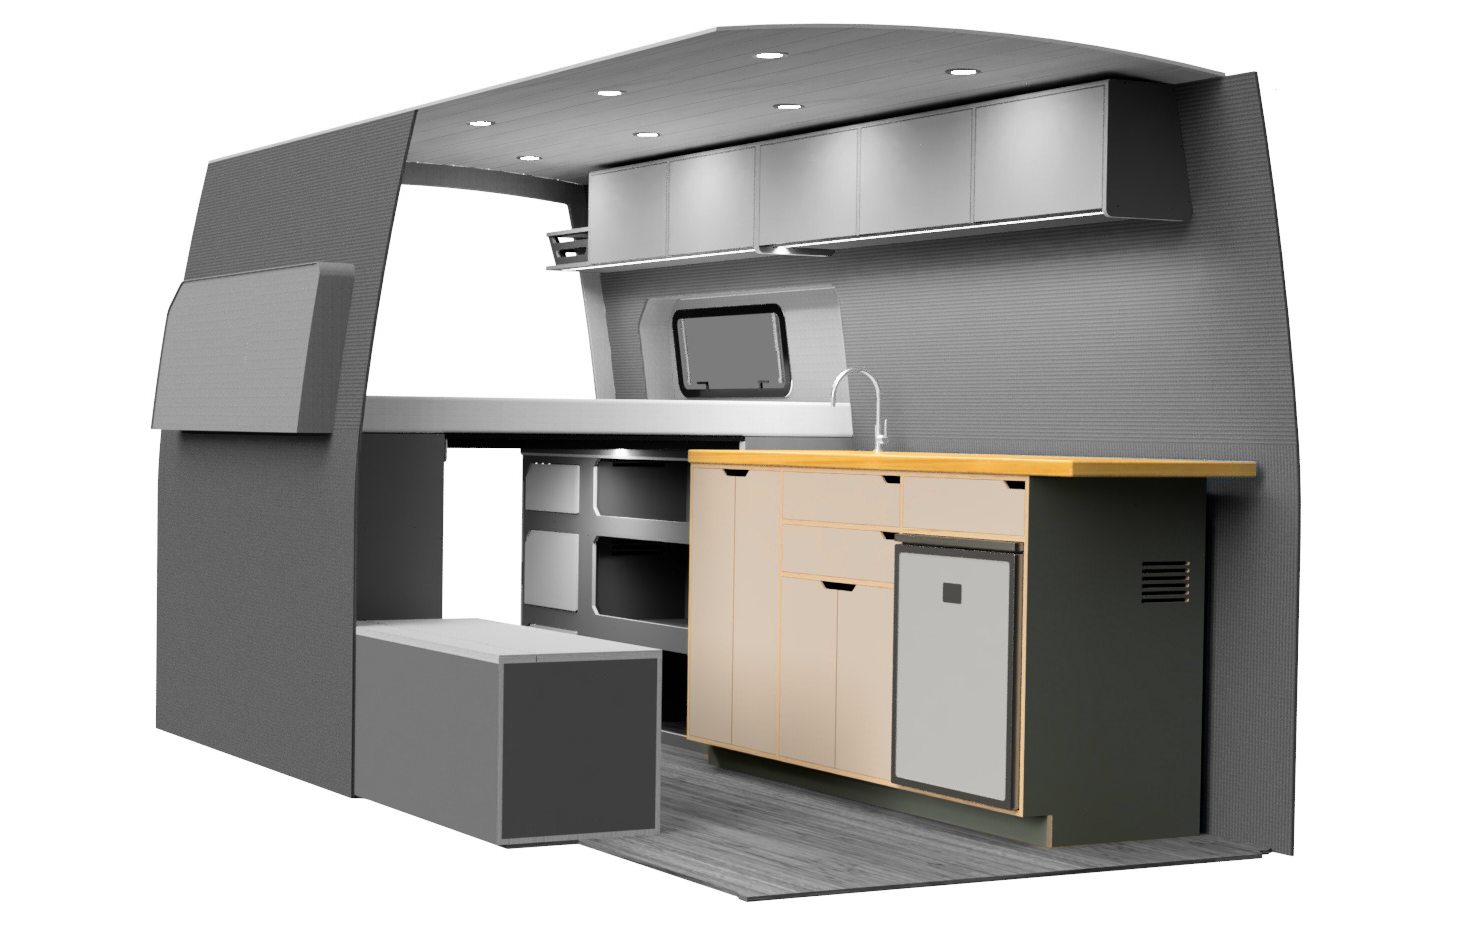 Sprinter Van Kitchen Kit | DIY Camper Van Conversion Kits | Galley Kitchen for Mercedes Sprinter Camper Vans